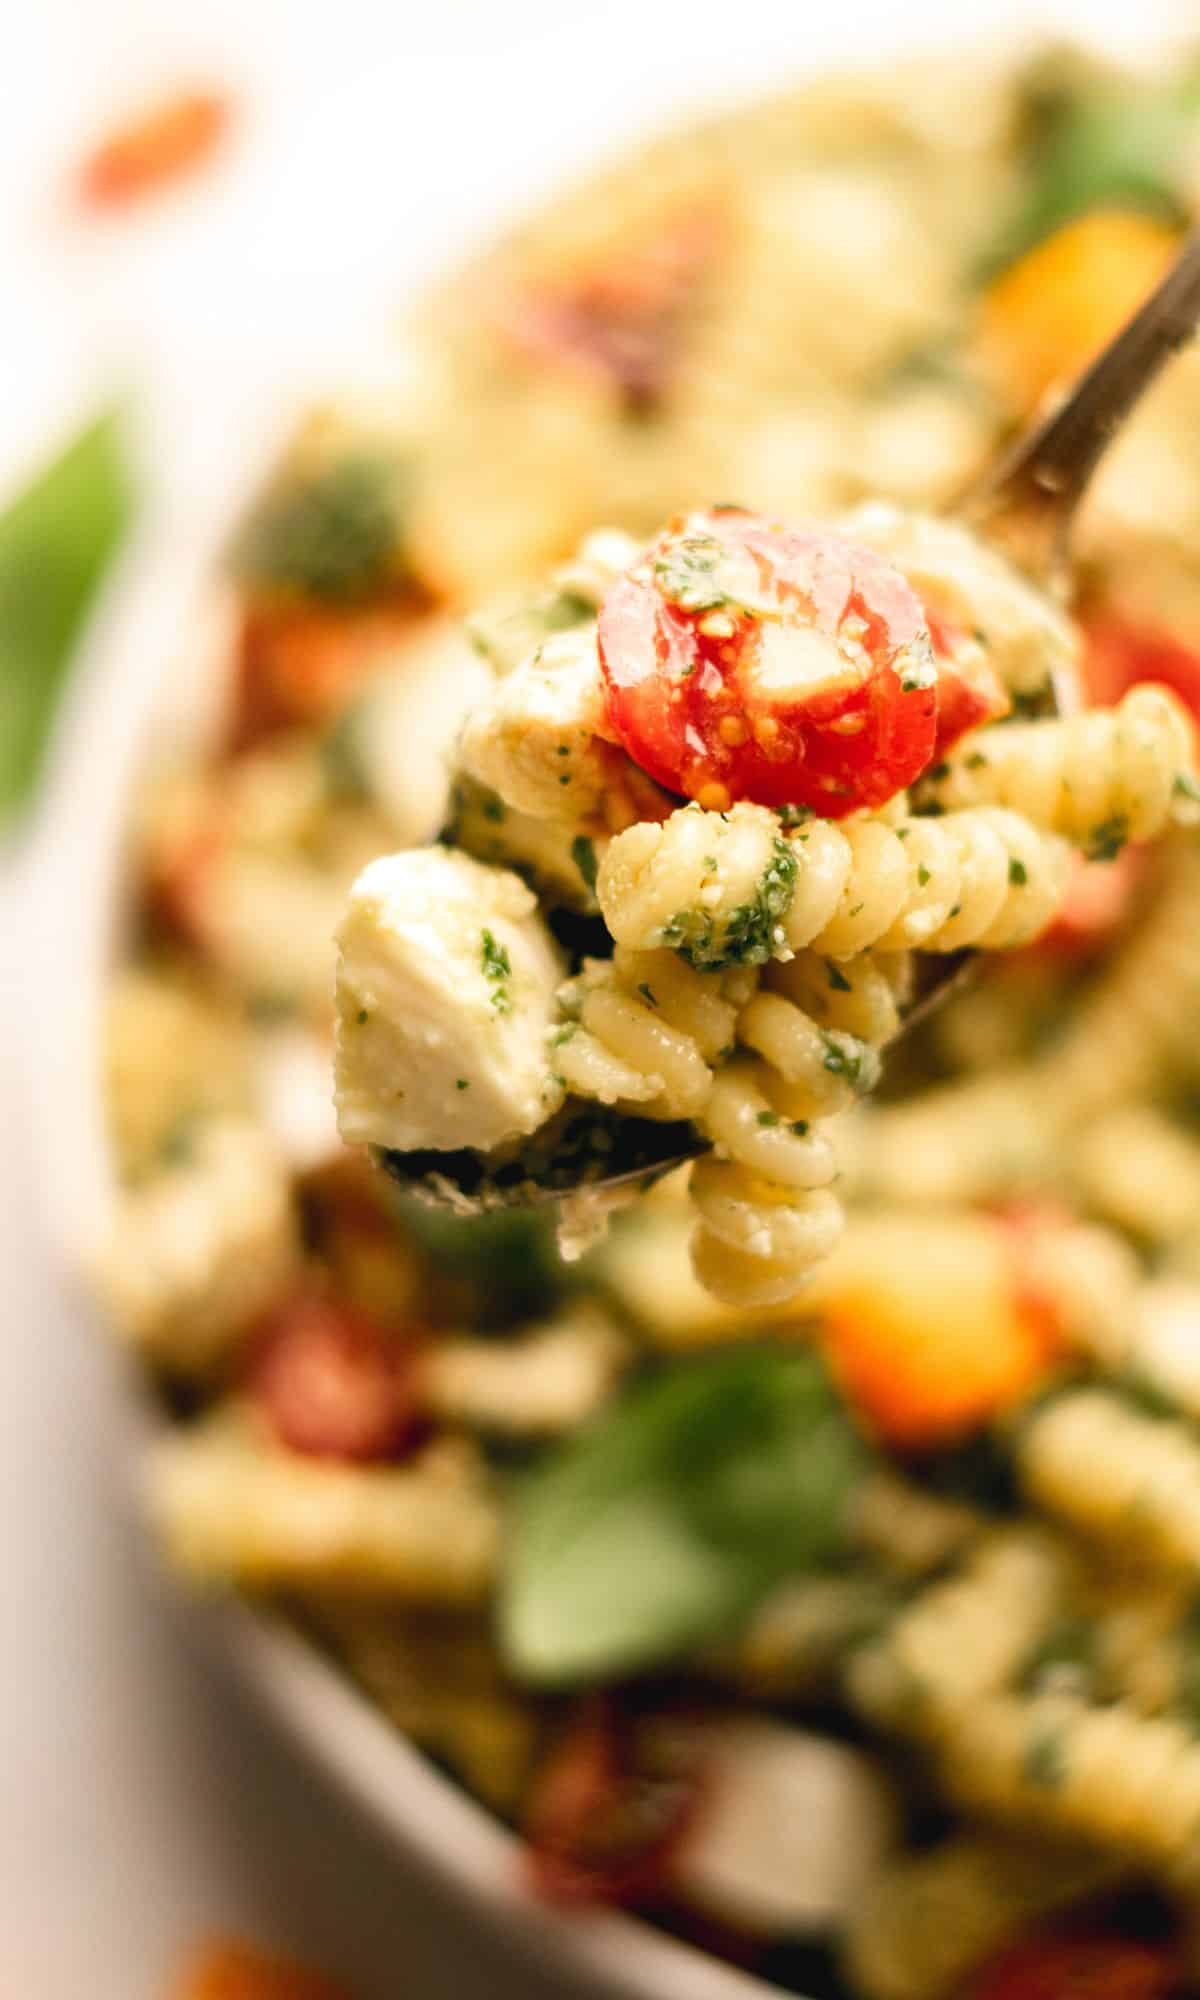 A spoon full of pesto pasta salad with fresh mozzarella and tomato.